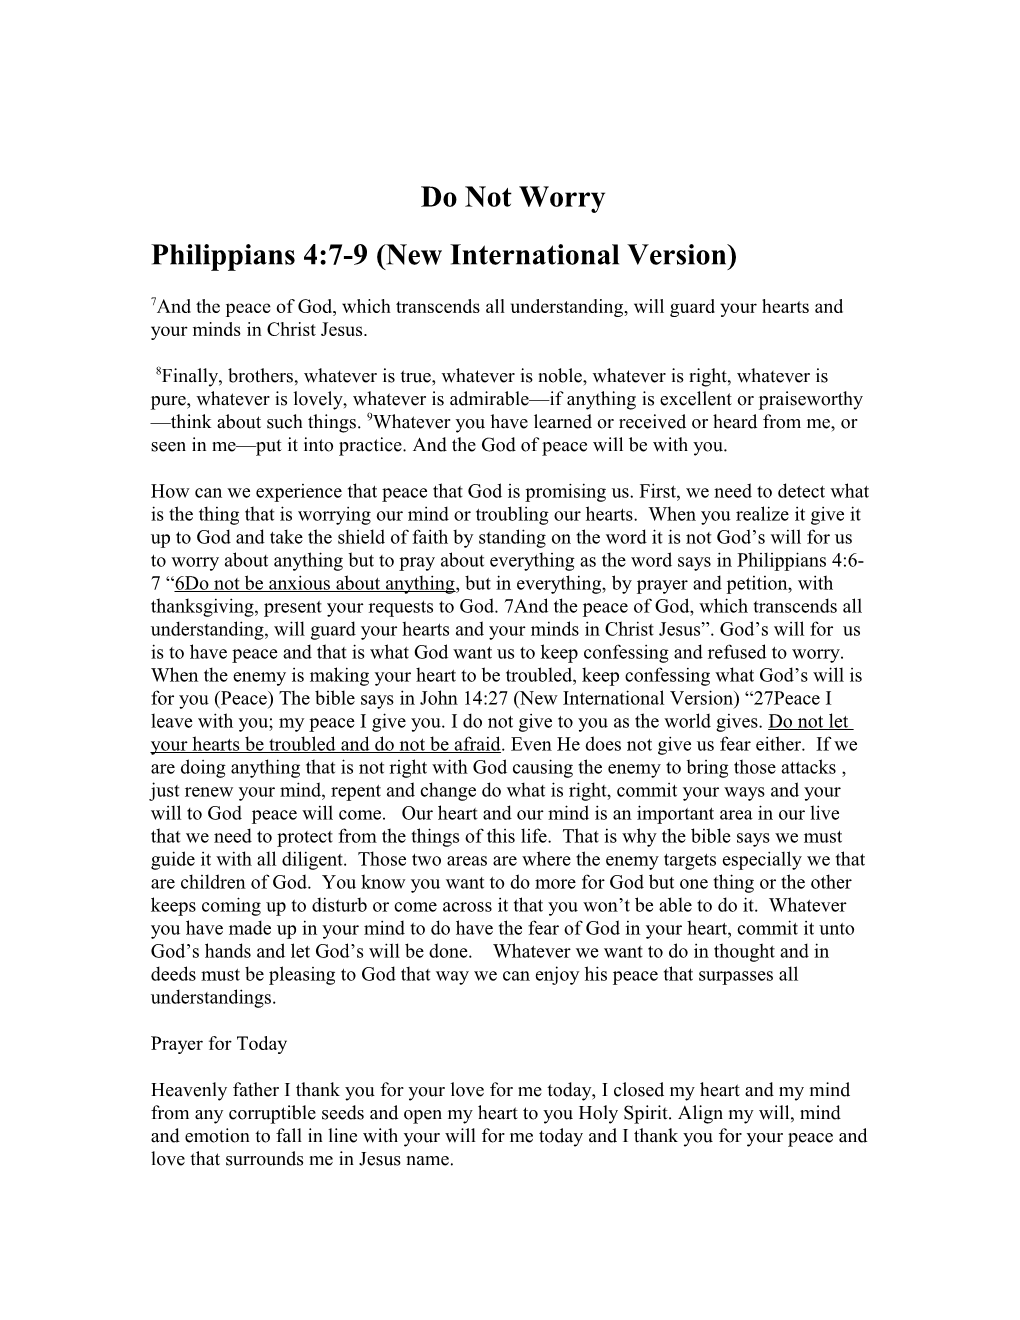 Philippians 4:7-9 (New International Version)